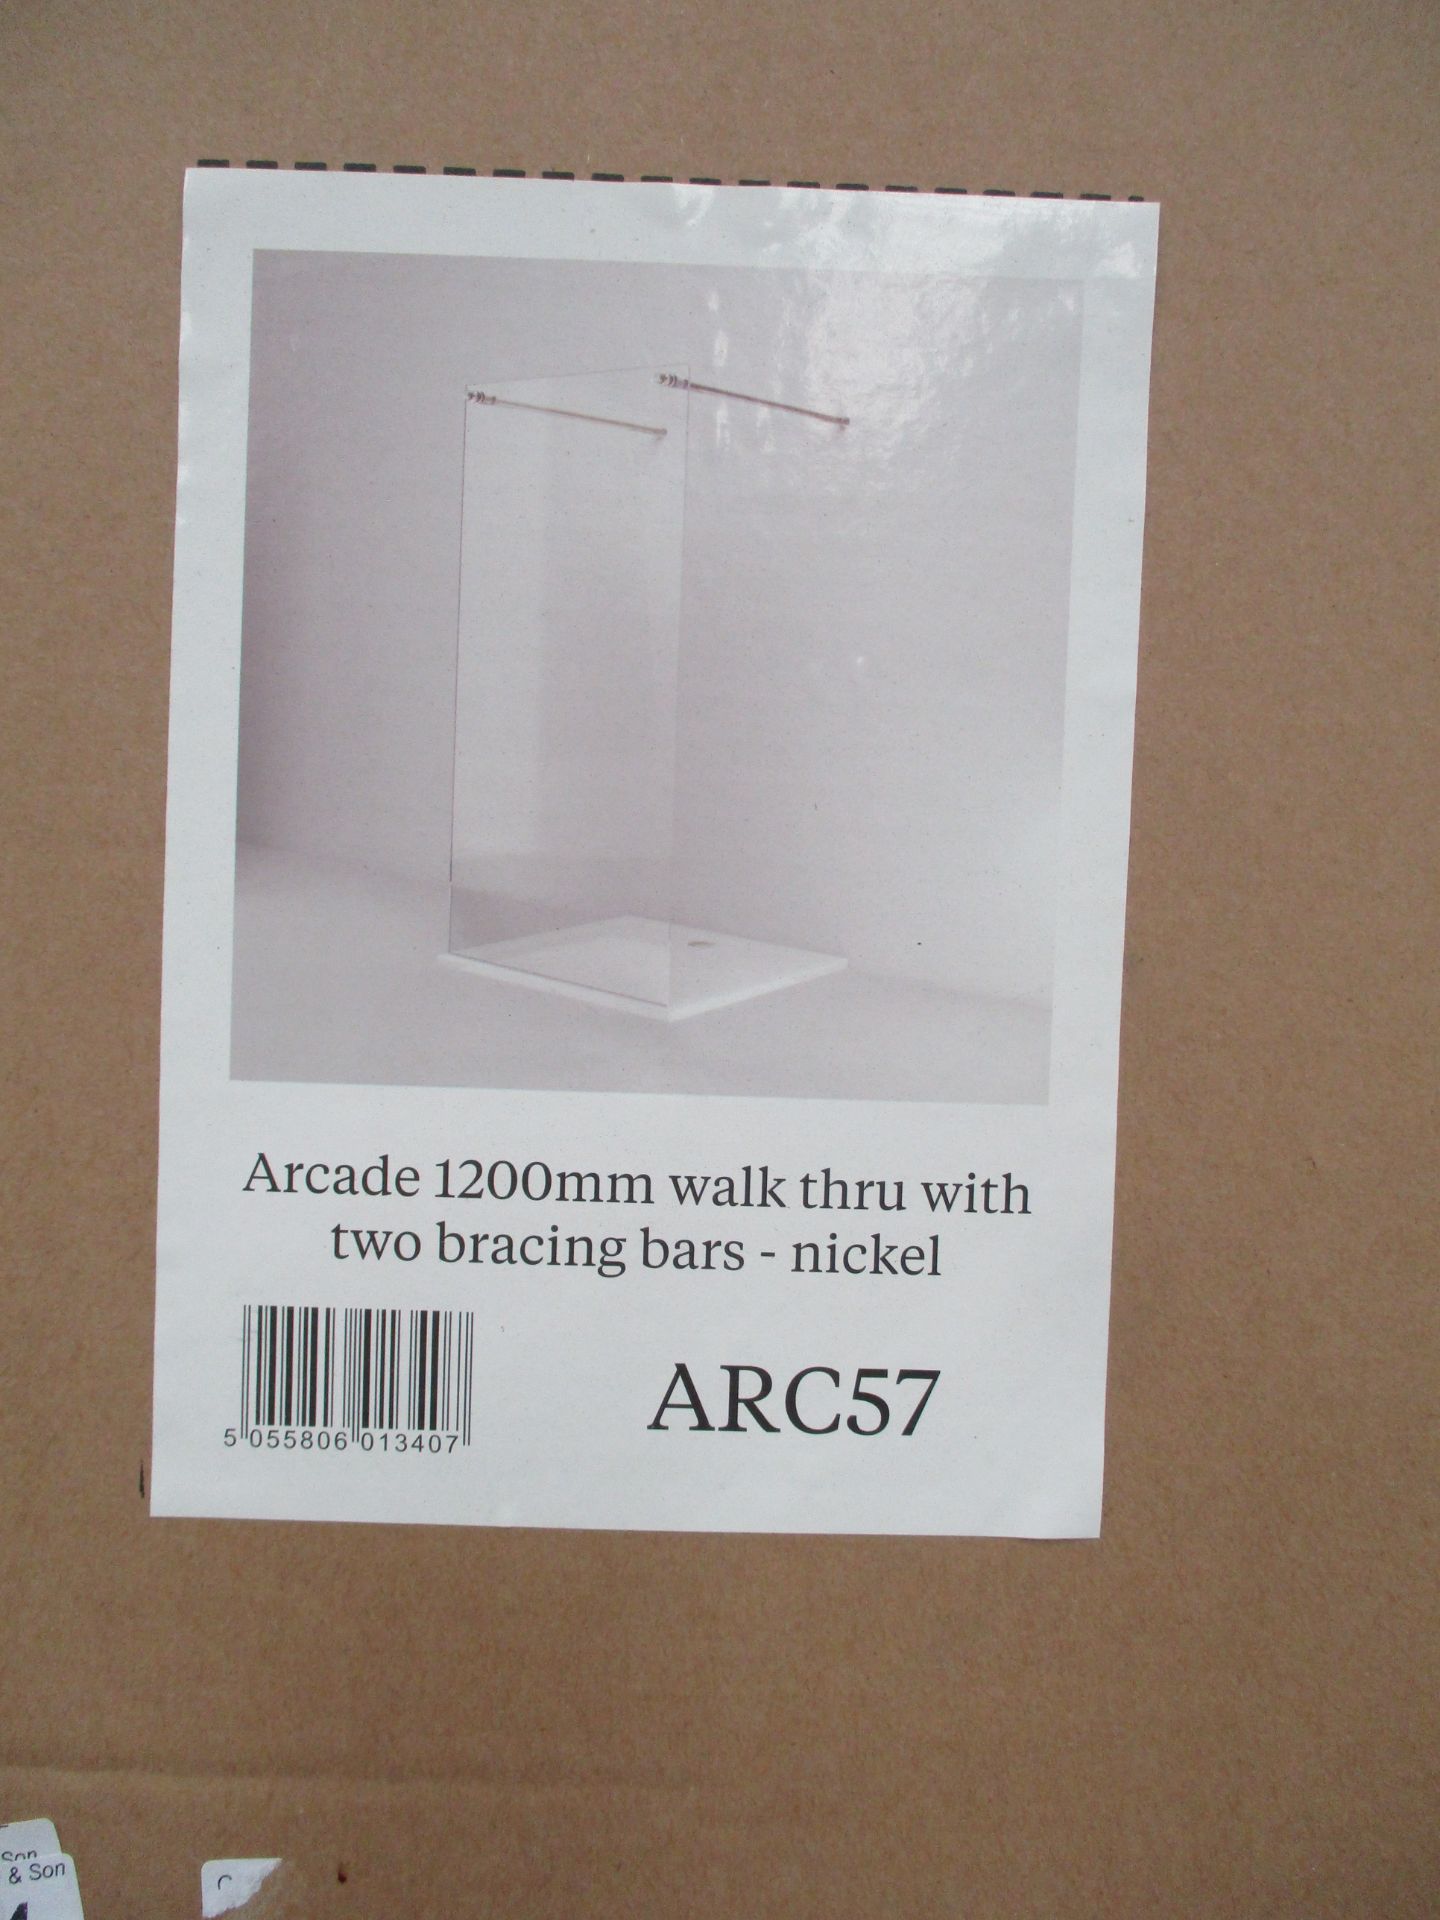 An Arcade 1200mm walk thru shower screen with two bracing bars nickel framed model ARC57 (boxed)